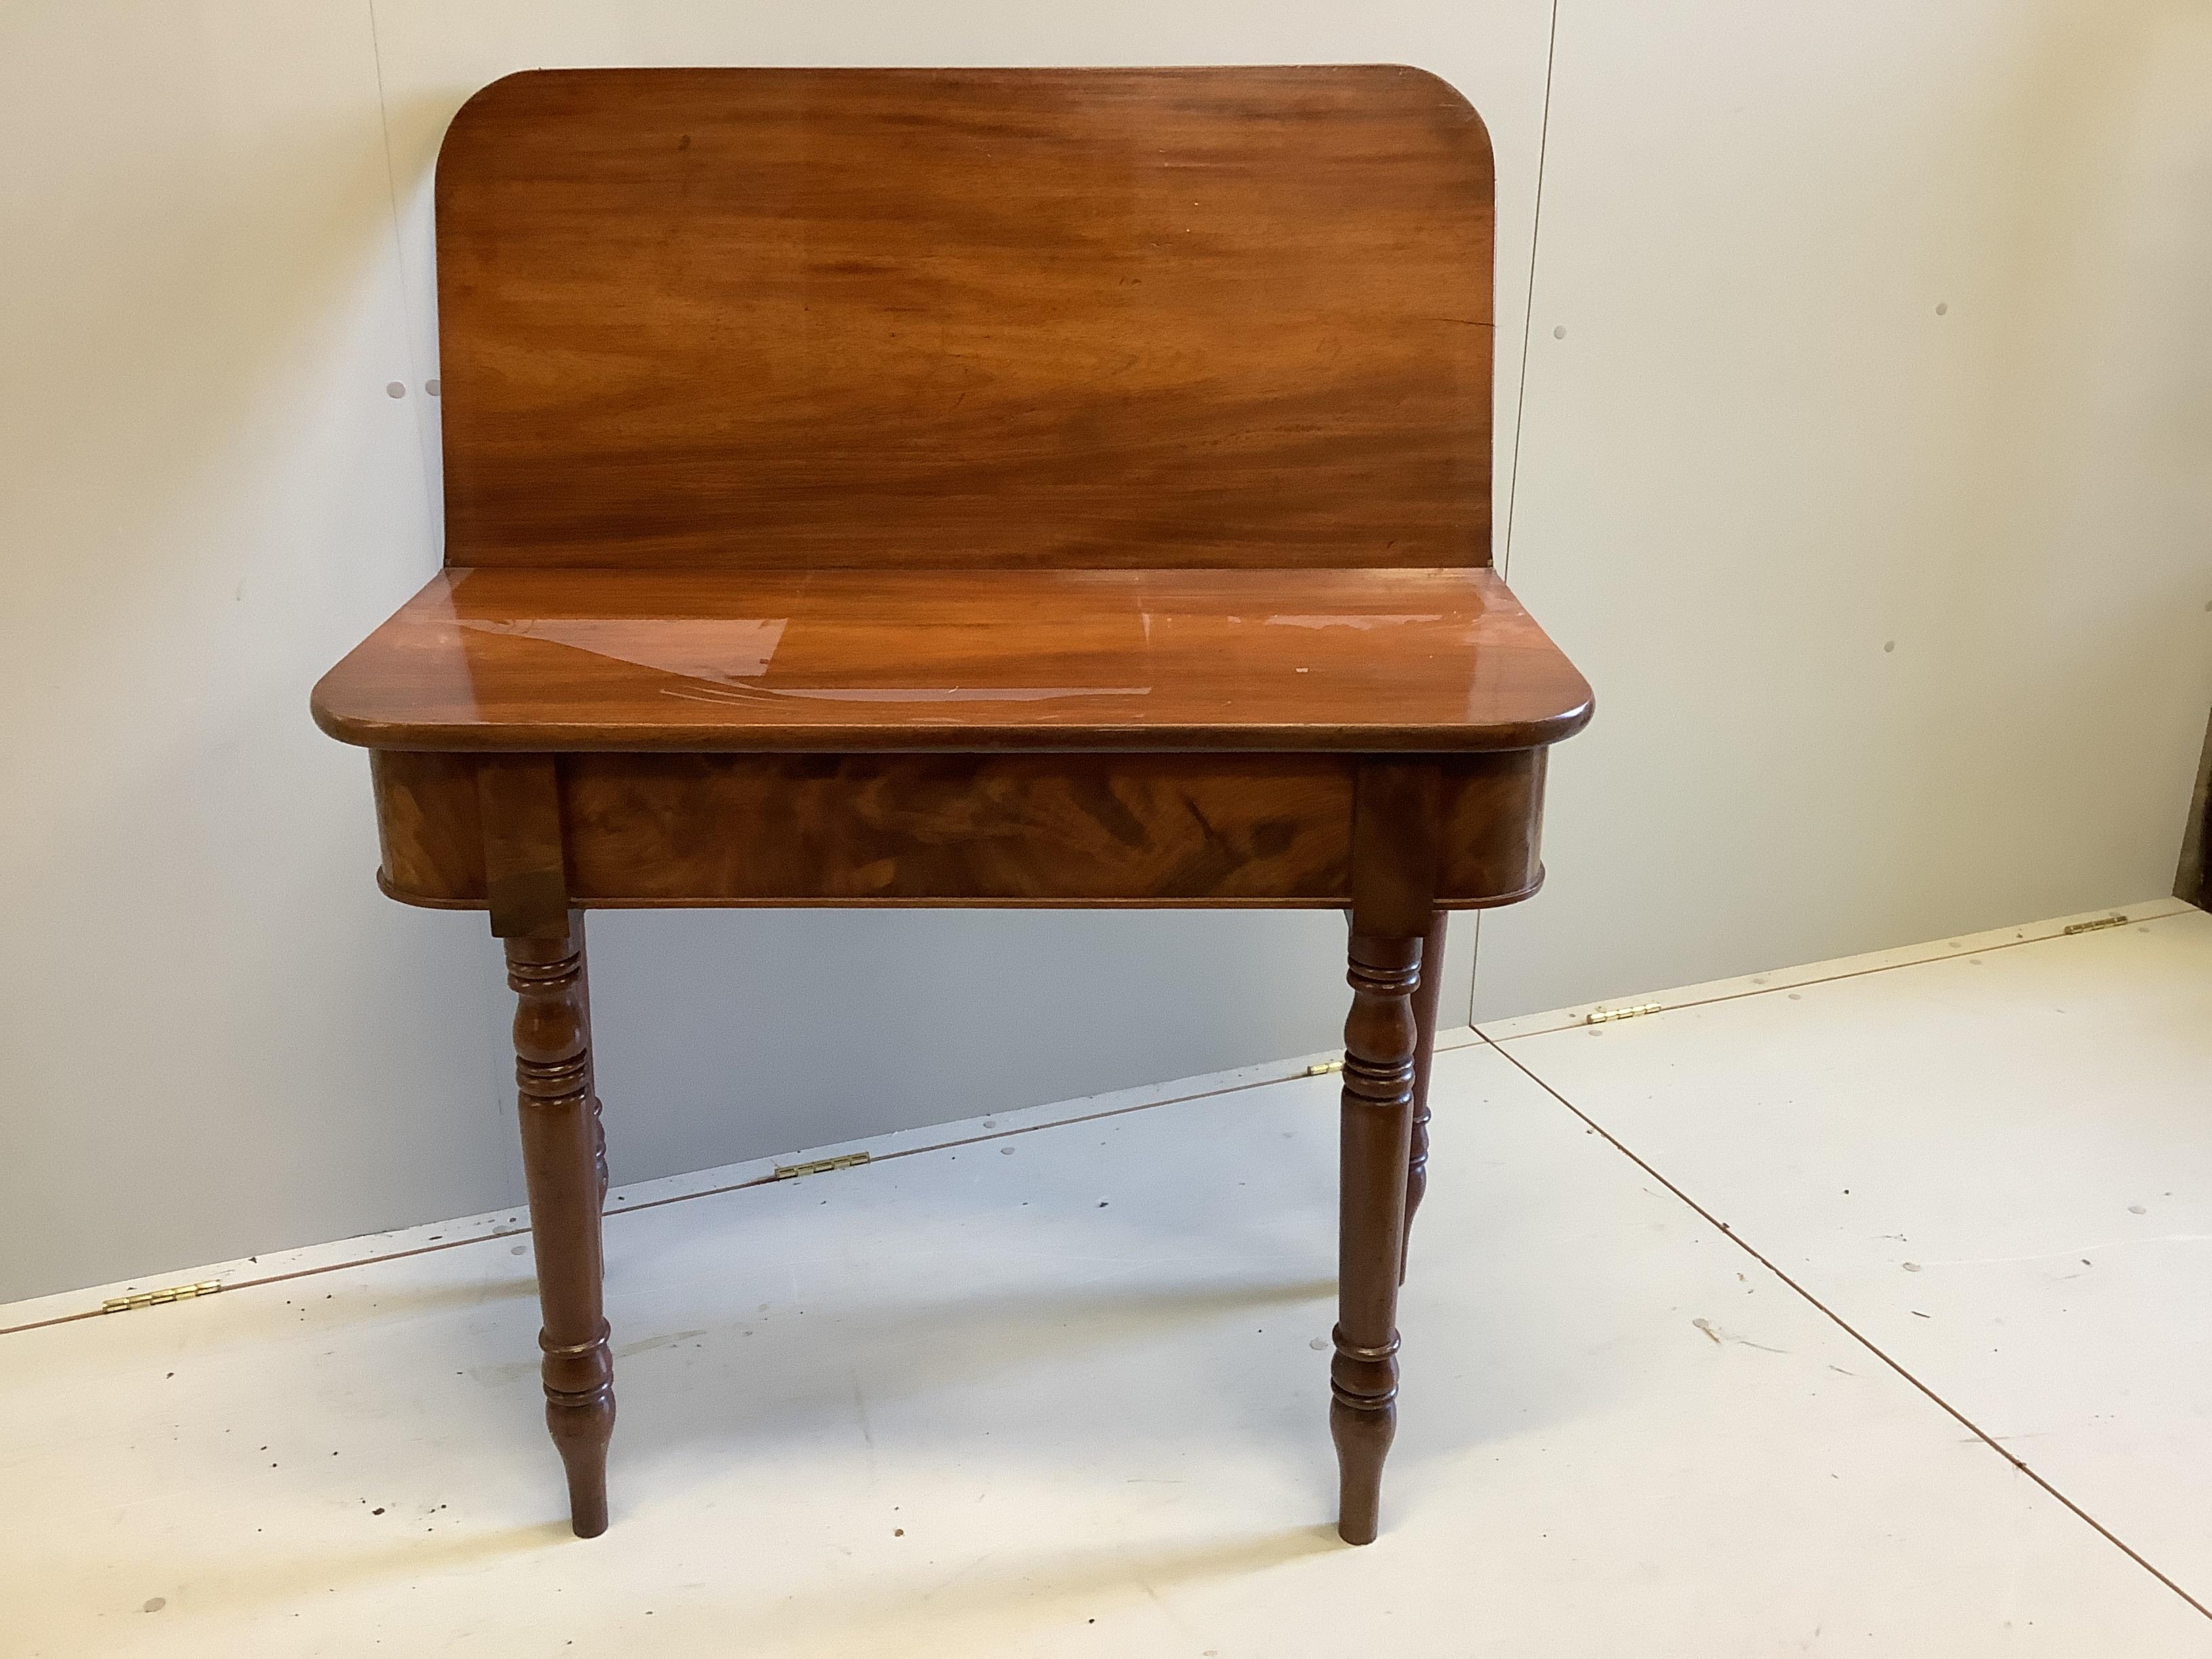 An early Victorian rectangular mahogany folding tea table, width 96cm, depth 45cm, height 77cm